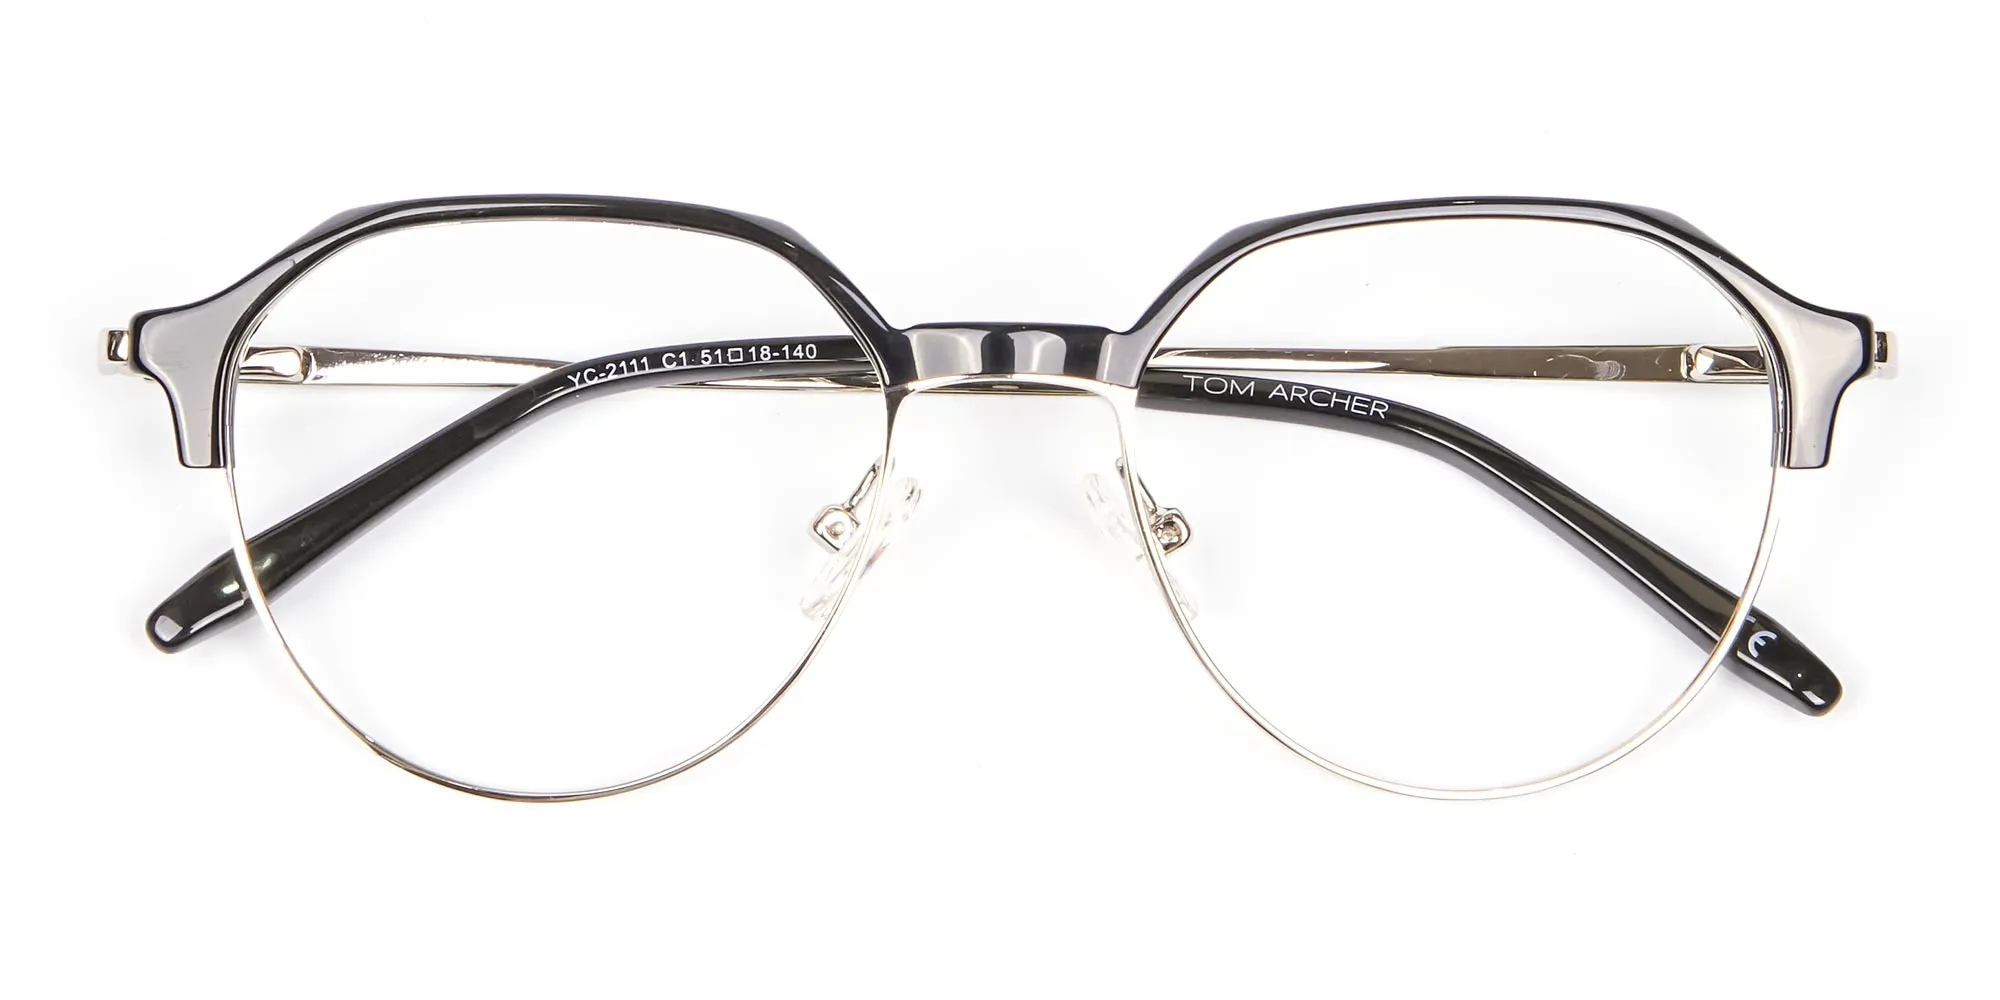 Unusual Shaped Glasses Black & Silver  - 2